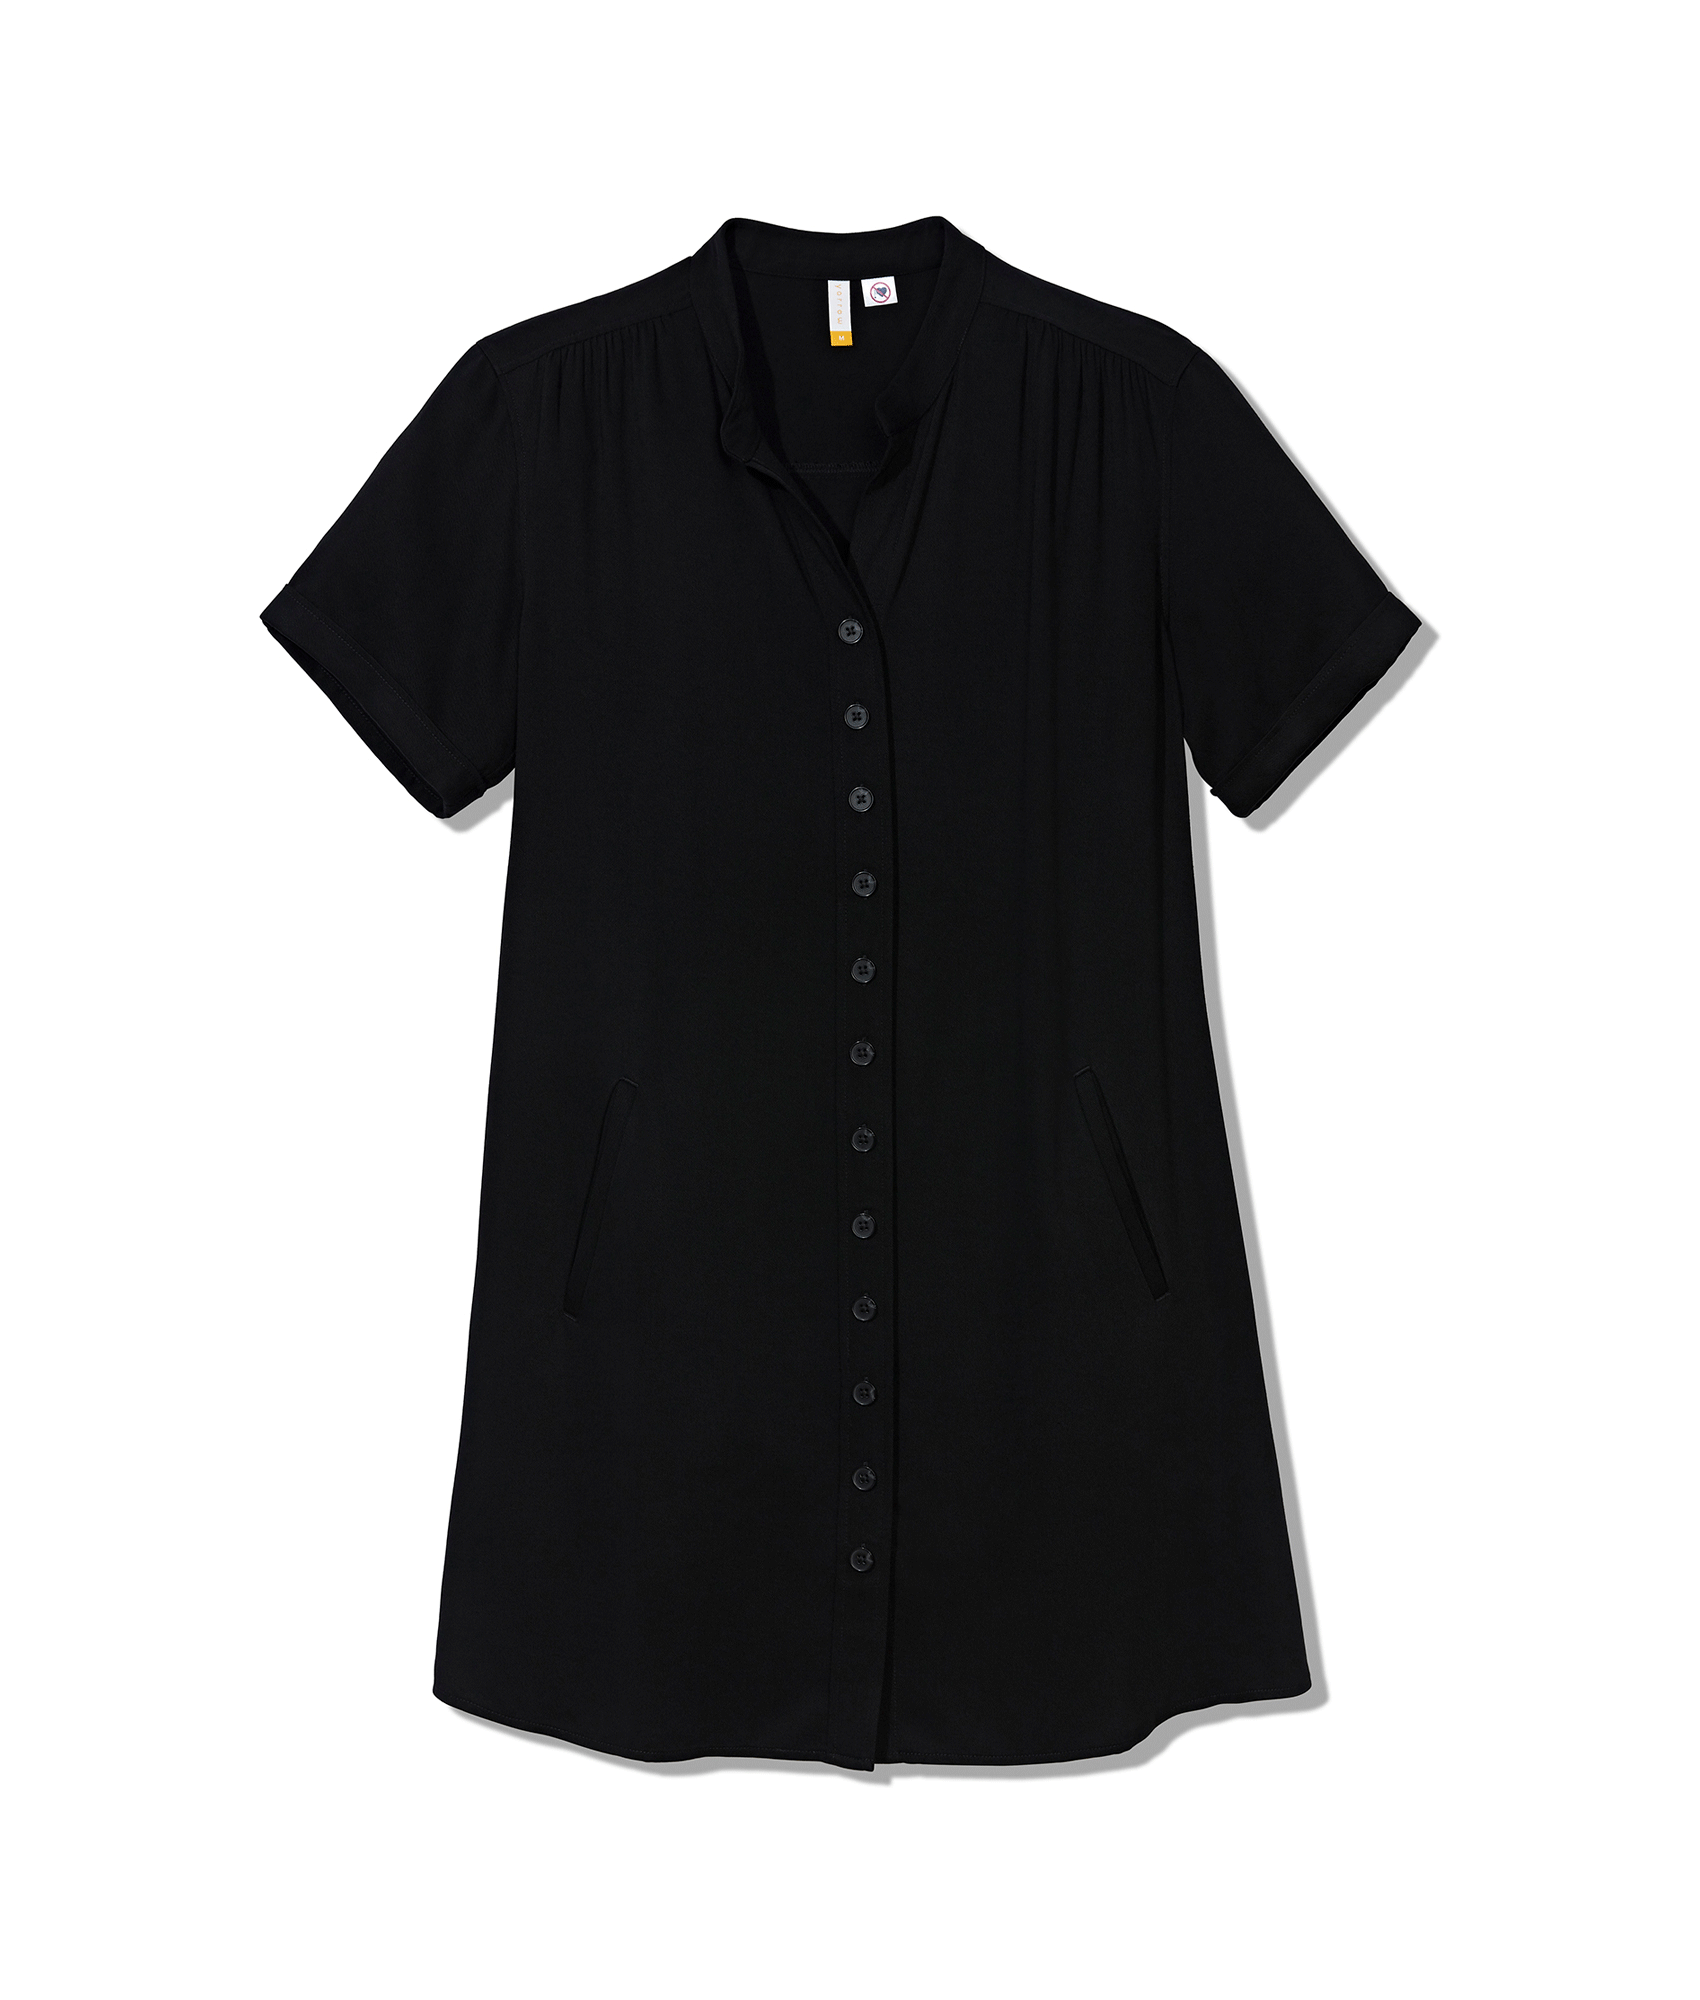 The Frieda Essential Day Dress in Black